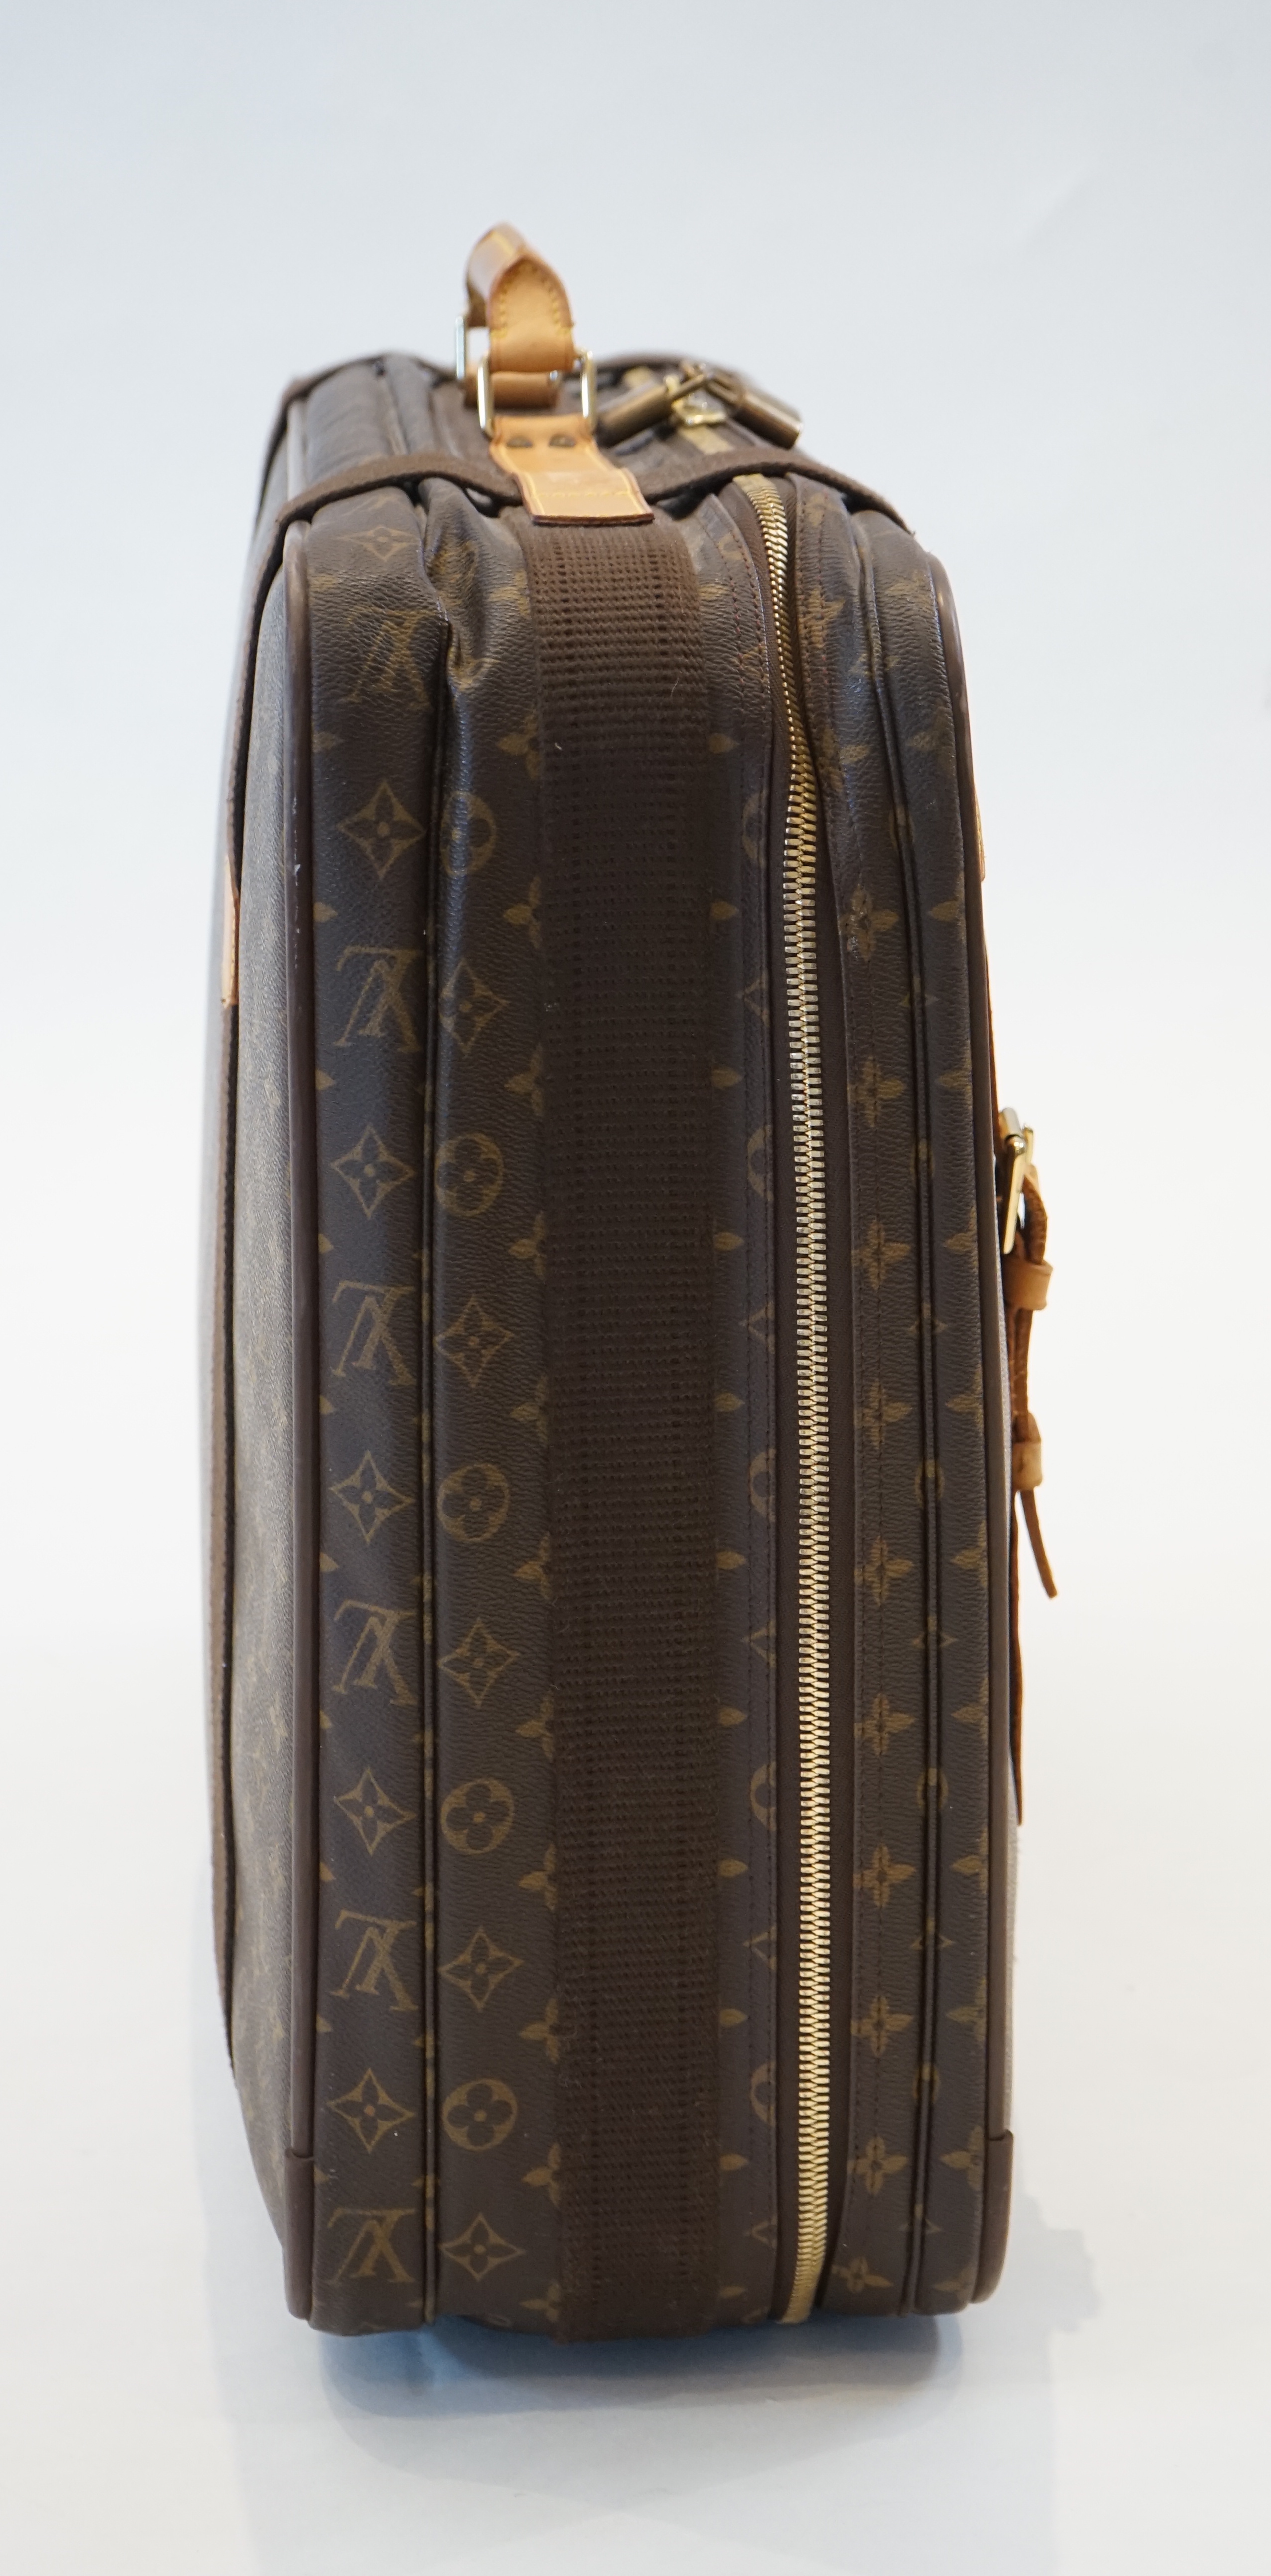 A Louis Vuitton Satellite 65 travel bag width 65cm, depth 19cm, height 46cm